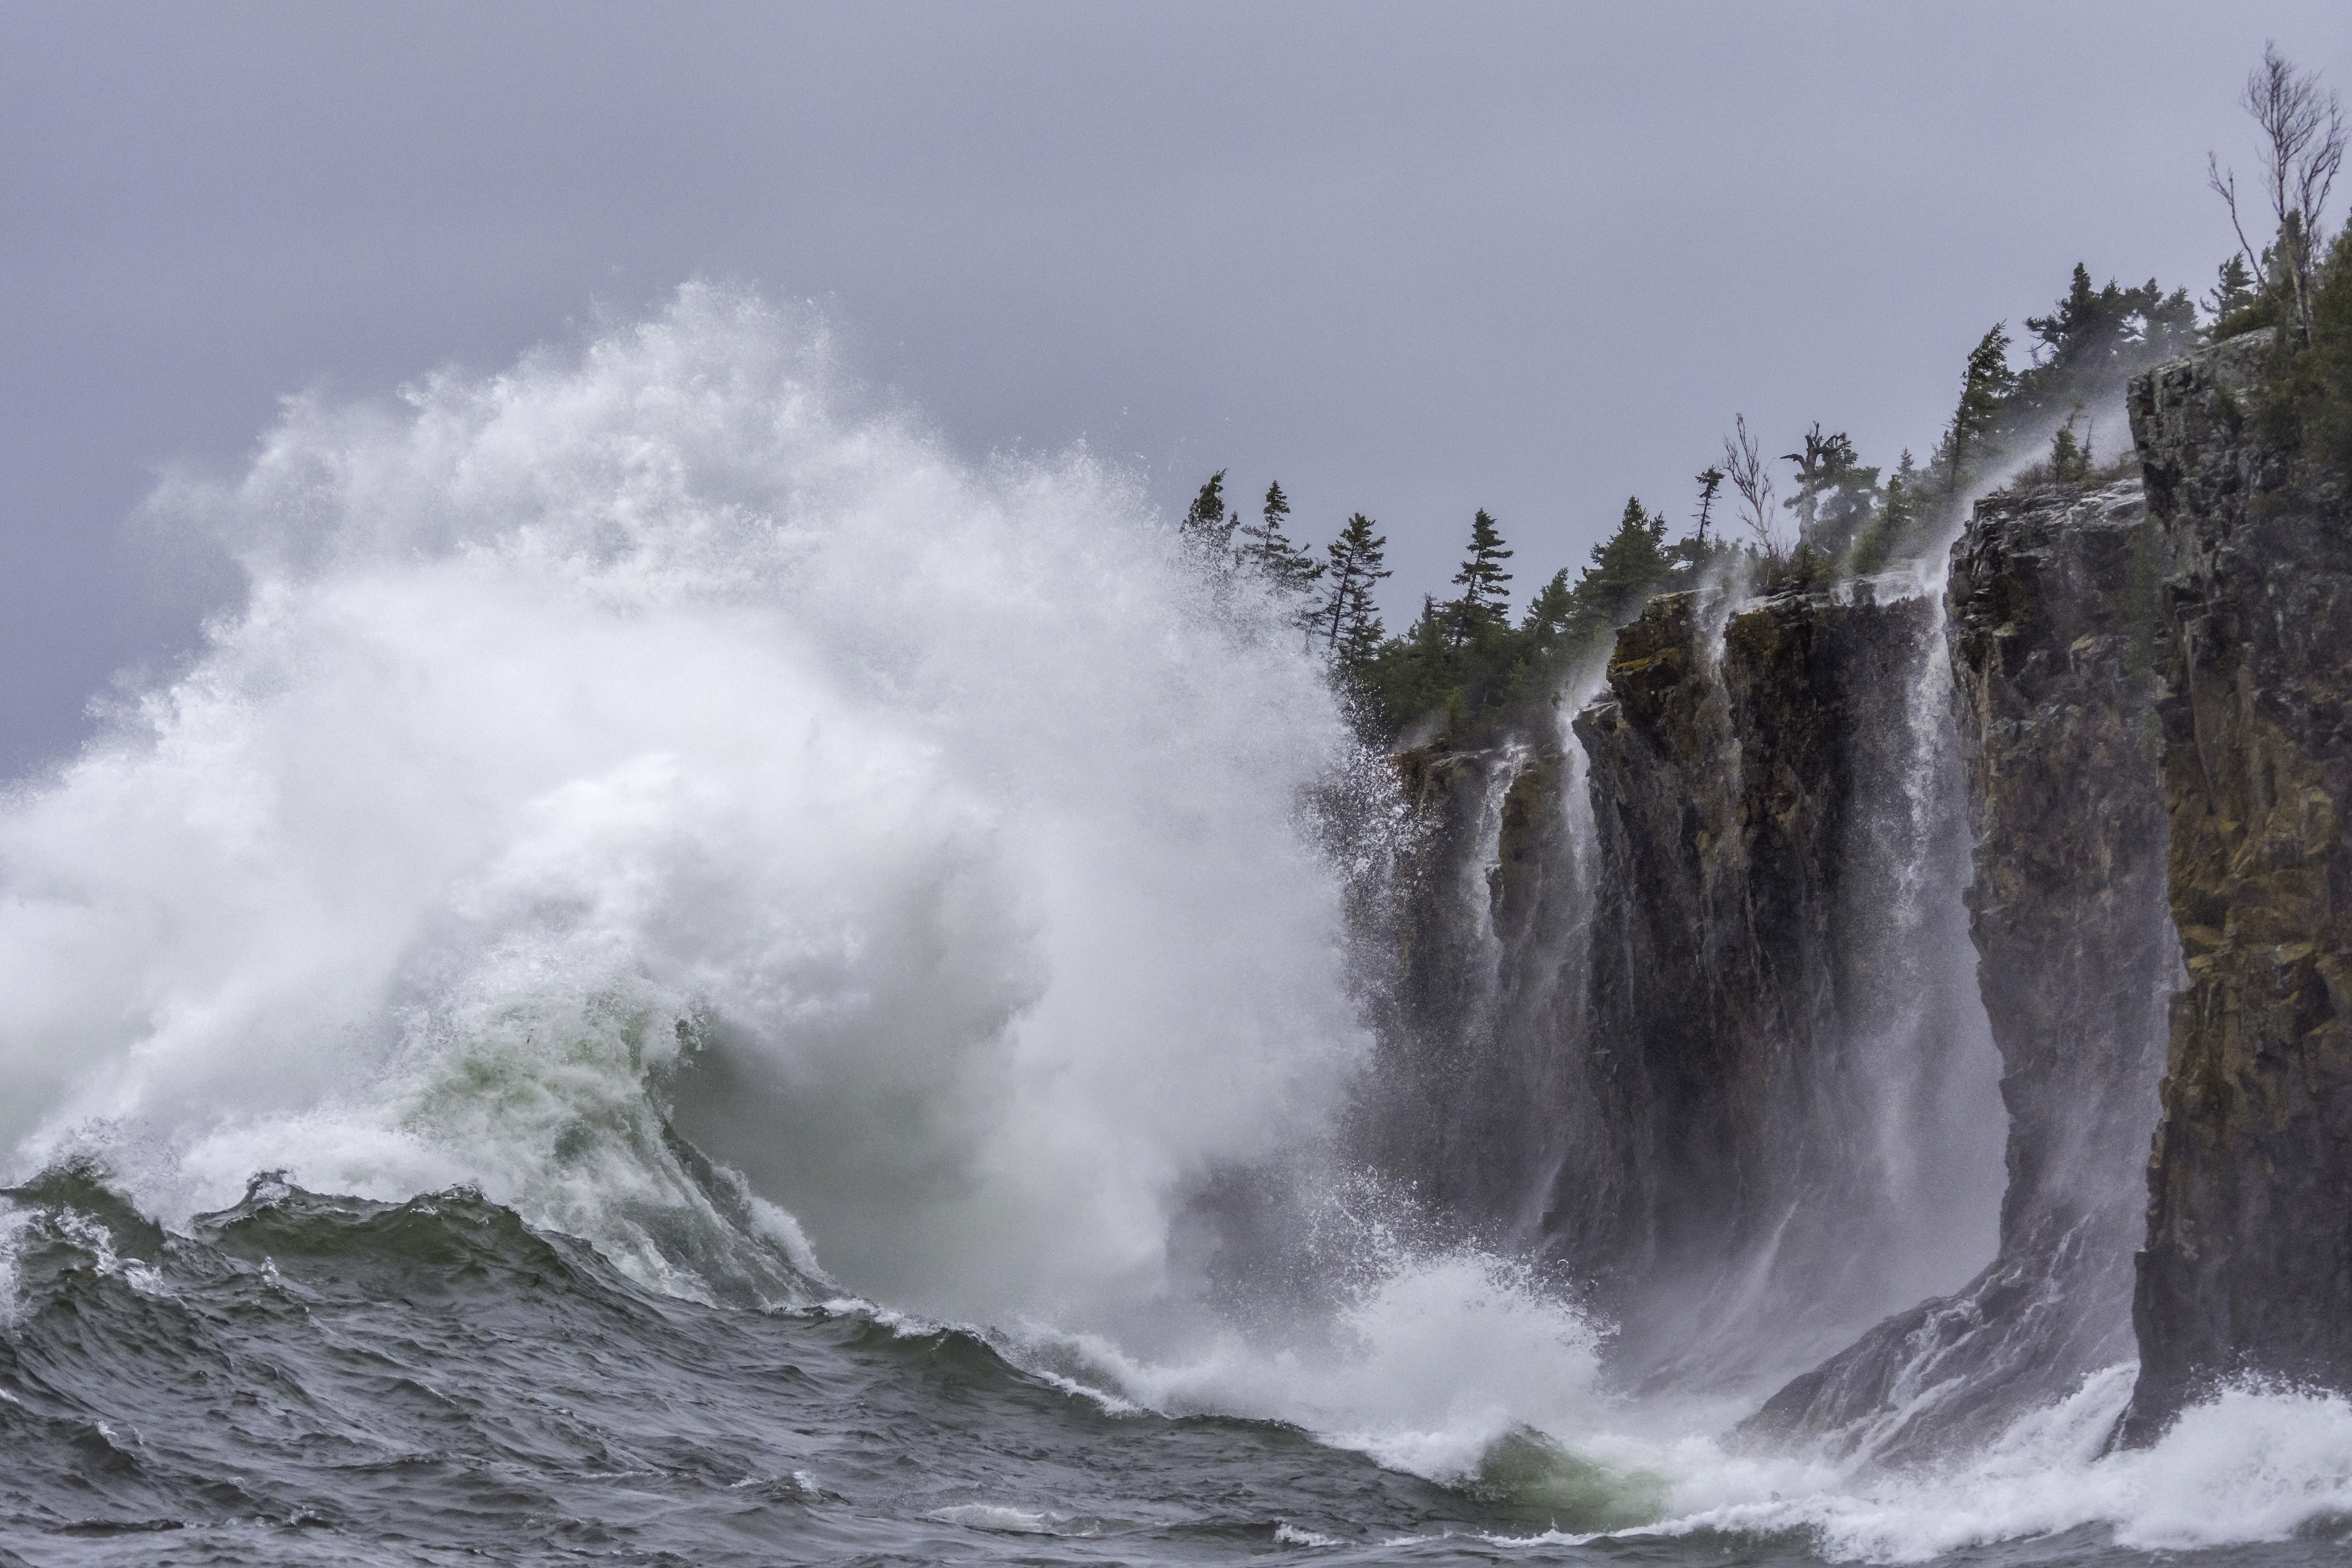 Epic waves crash above cliffs on Lake Superior's shore - StarTribune.com